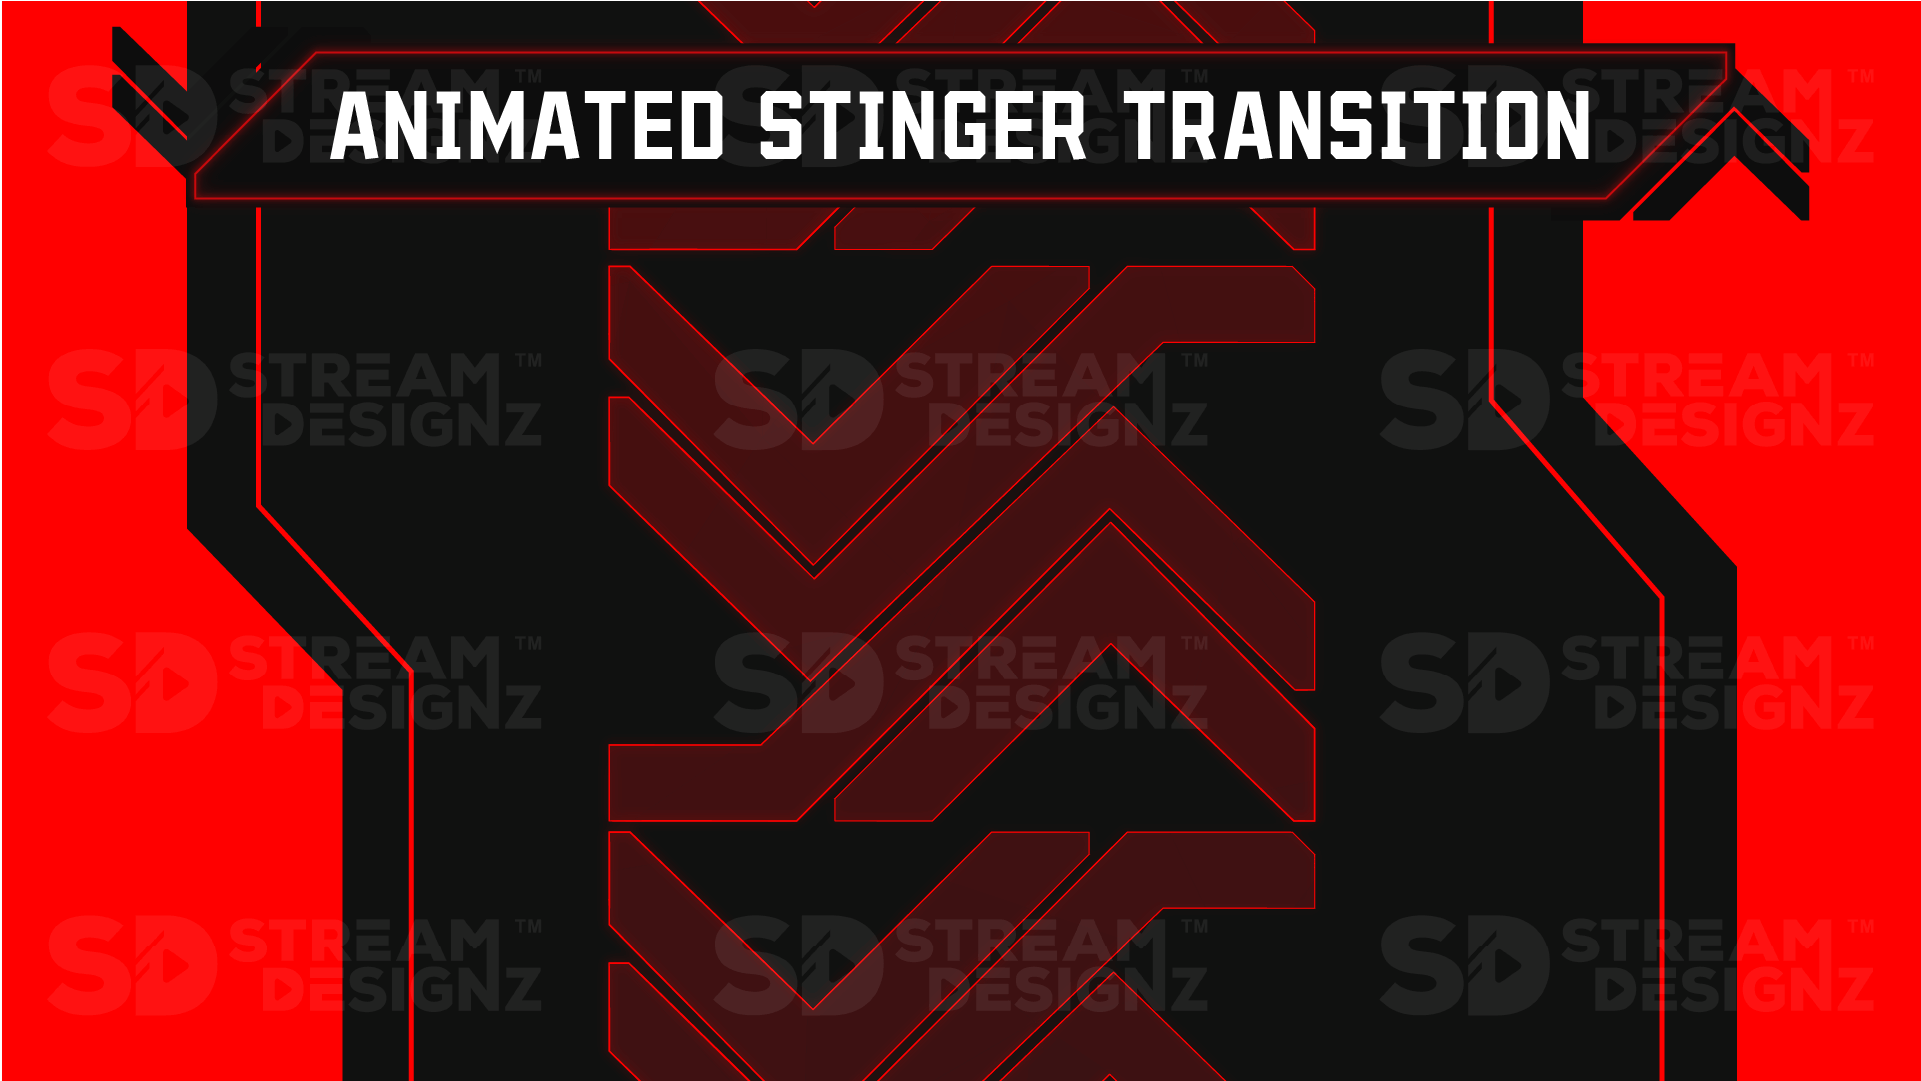 Ultimate stream package stinger transition code red stream designz